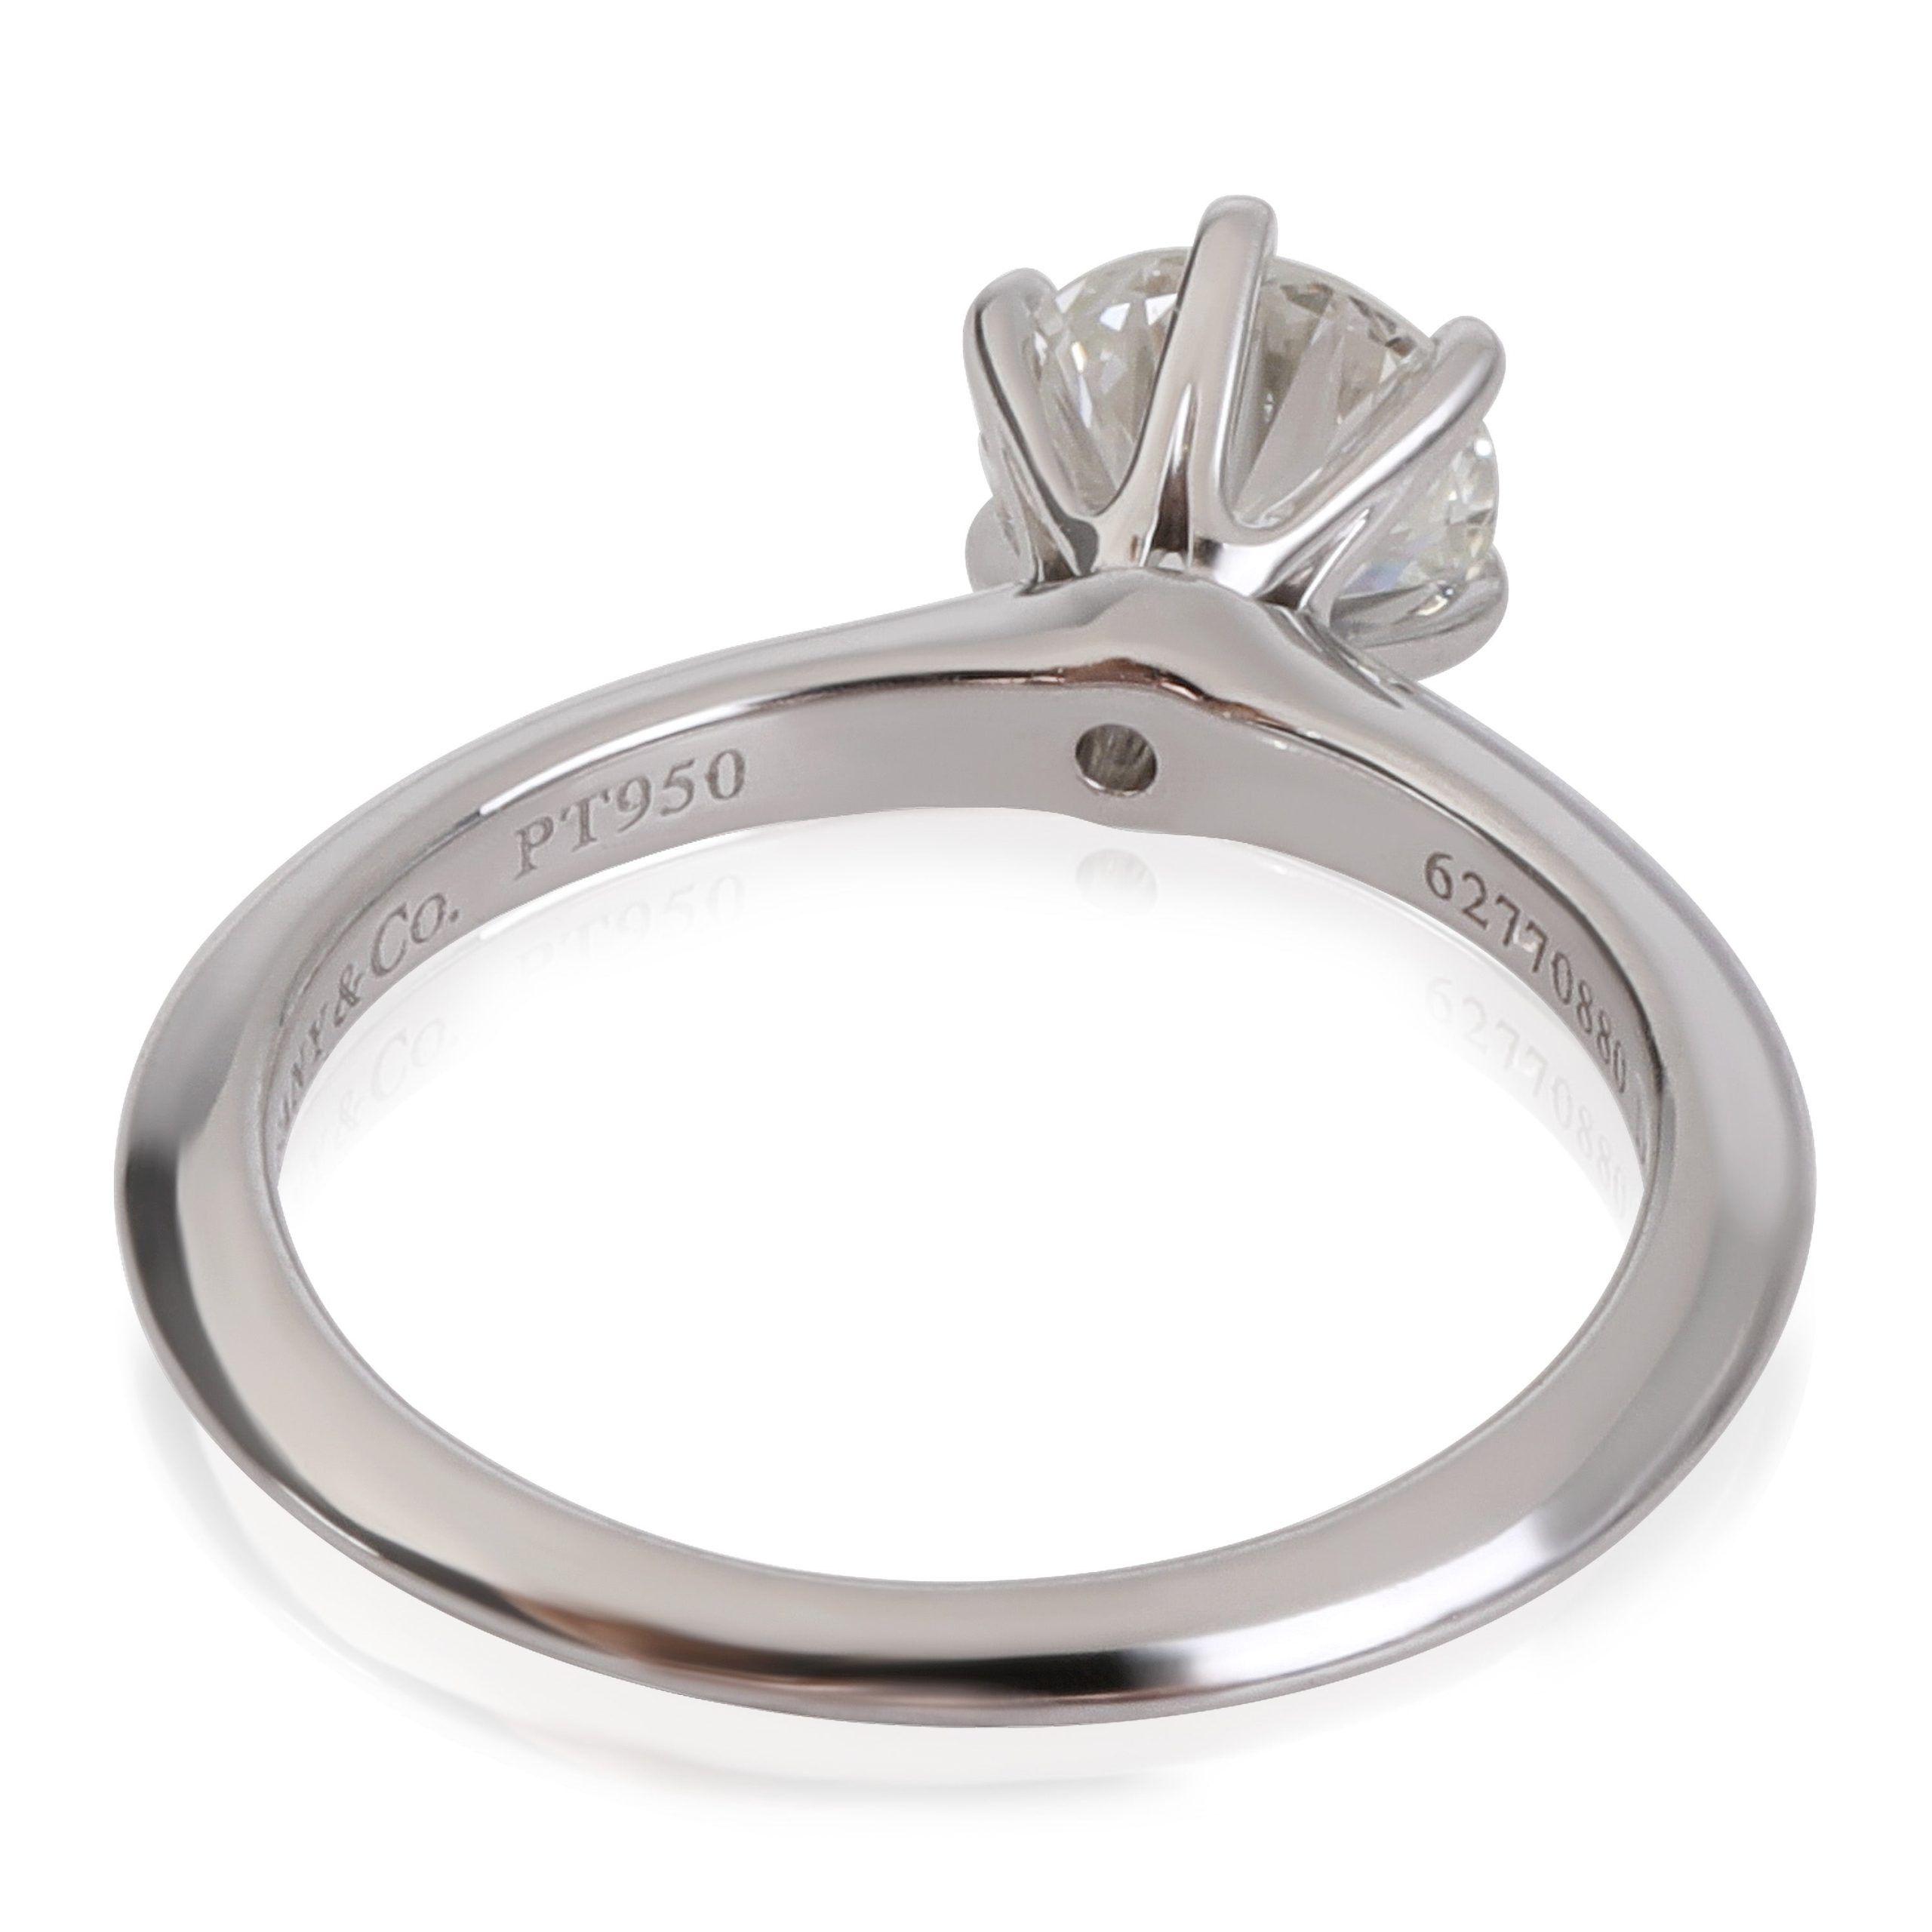 Tiffany & Co. Tiffany & Co. Diamond Engagement Ring in Platinum (0.94 ct I/VVS1) Size ONE SIZE - 3 Thumbnail